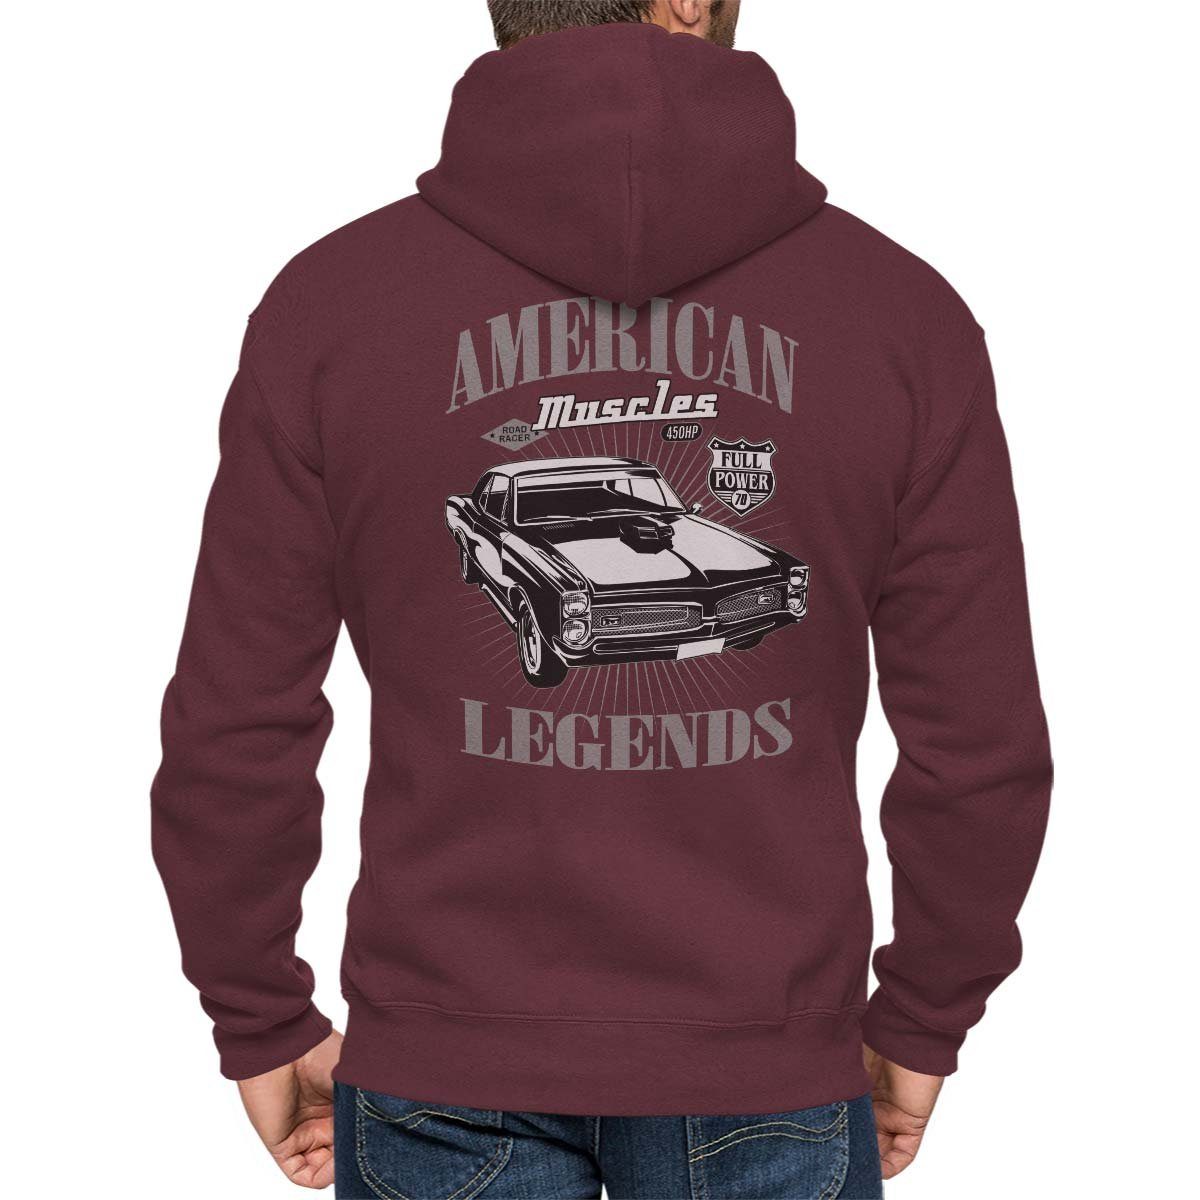 Rebel On Wheels Kapuzensweatjacke Kapuzenjacke Zip Hoodie American V8 Legends mit Auto / US-Car Motiv Dunkel Rot